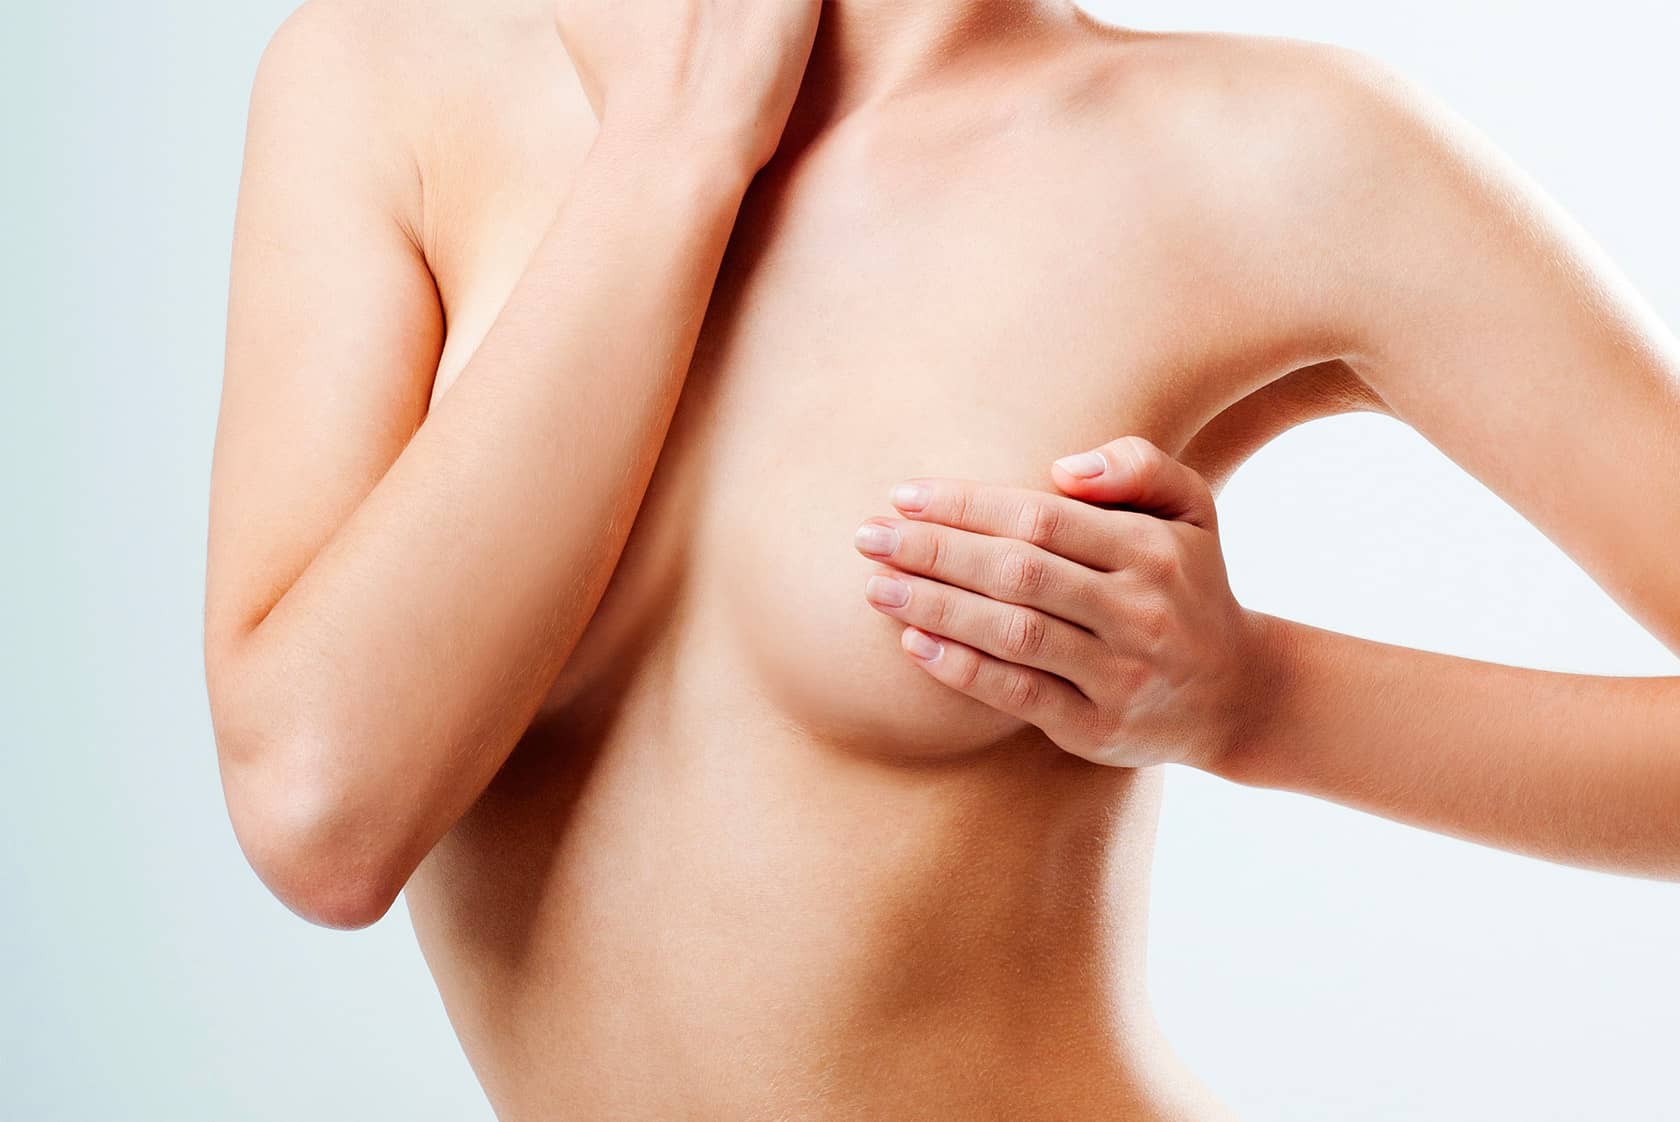 уменьшение объема груди у женщин фото 92